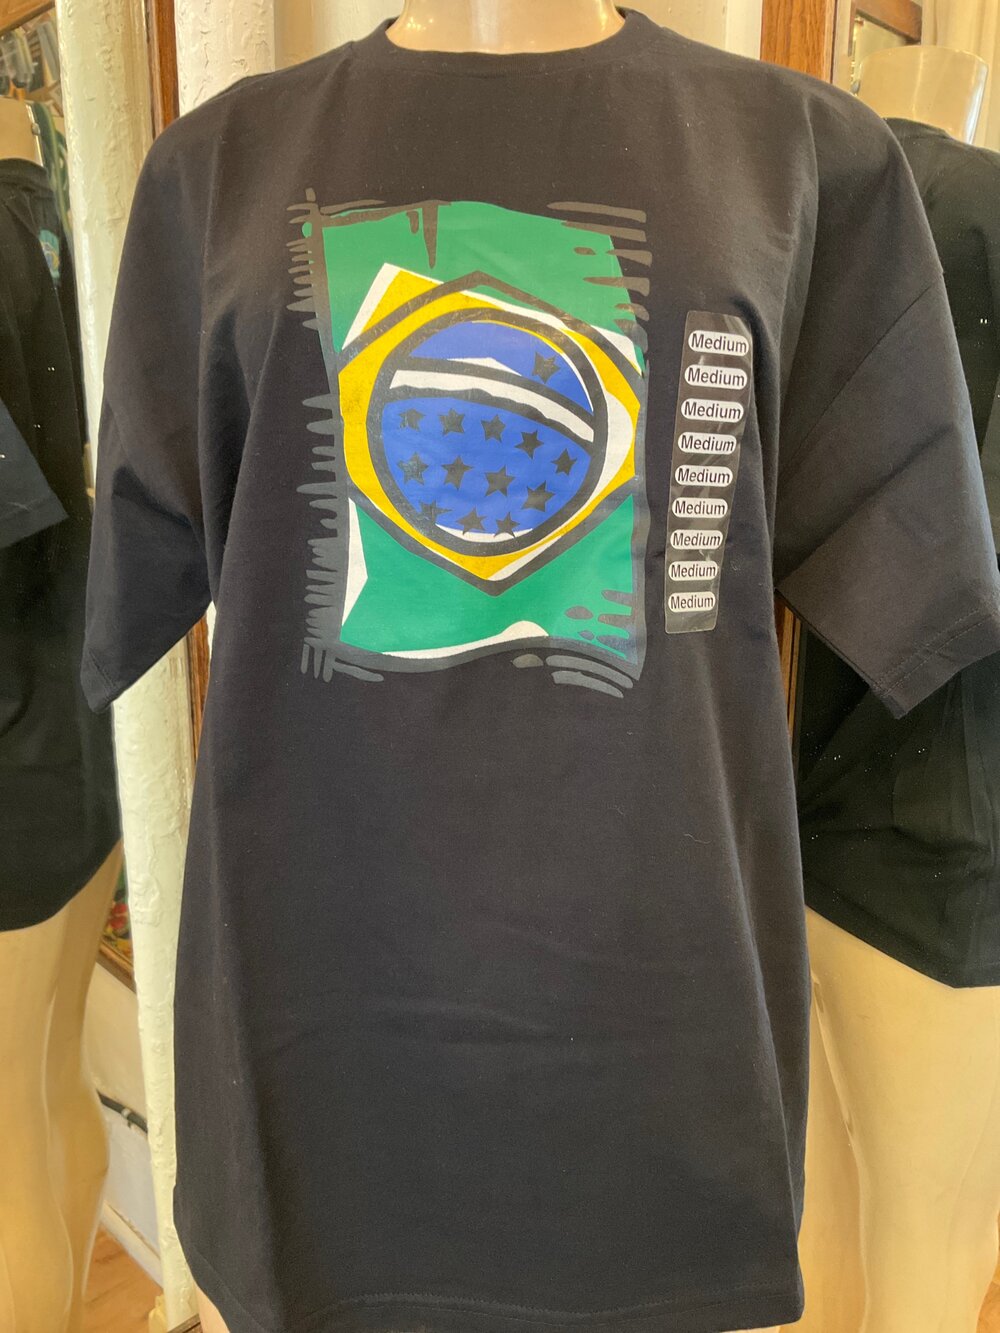 Camiseta Brasil Preta — BuziosNYC